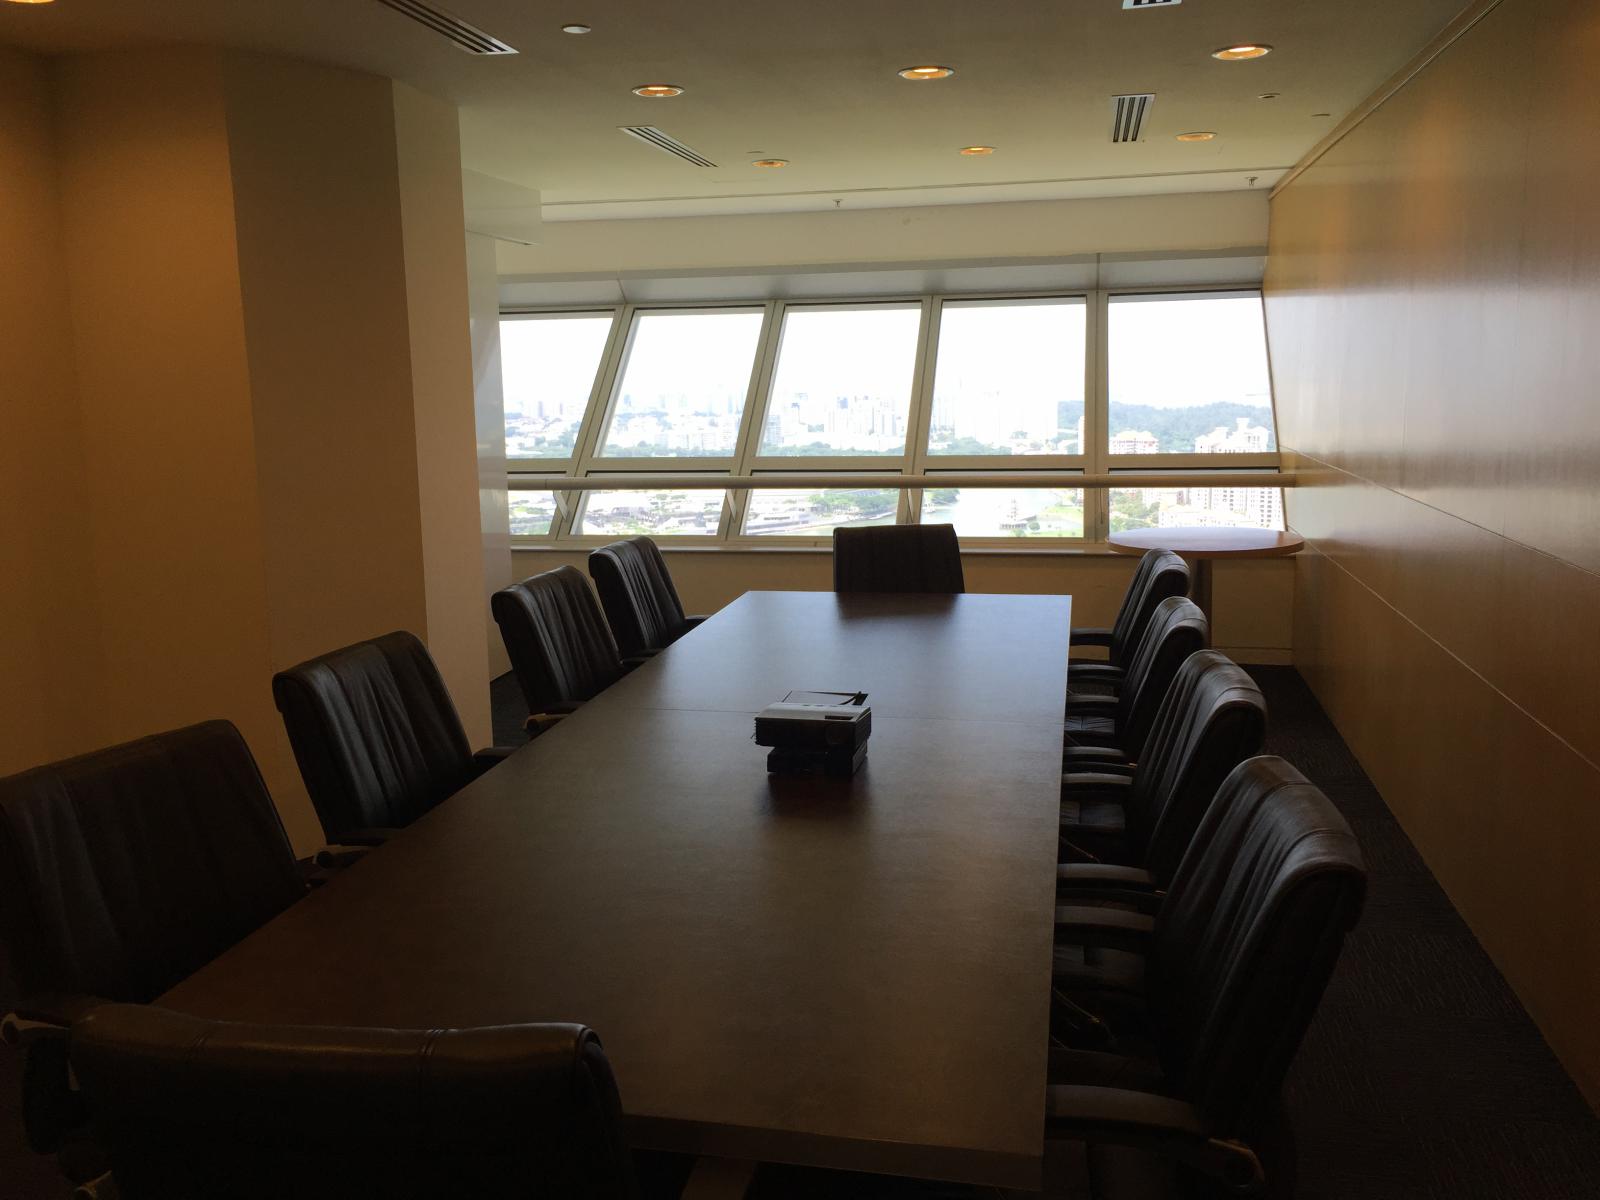 Nice meeting room view!